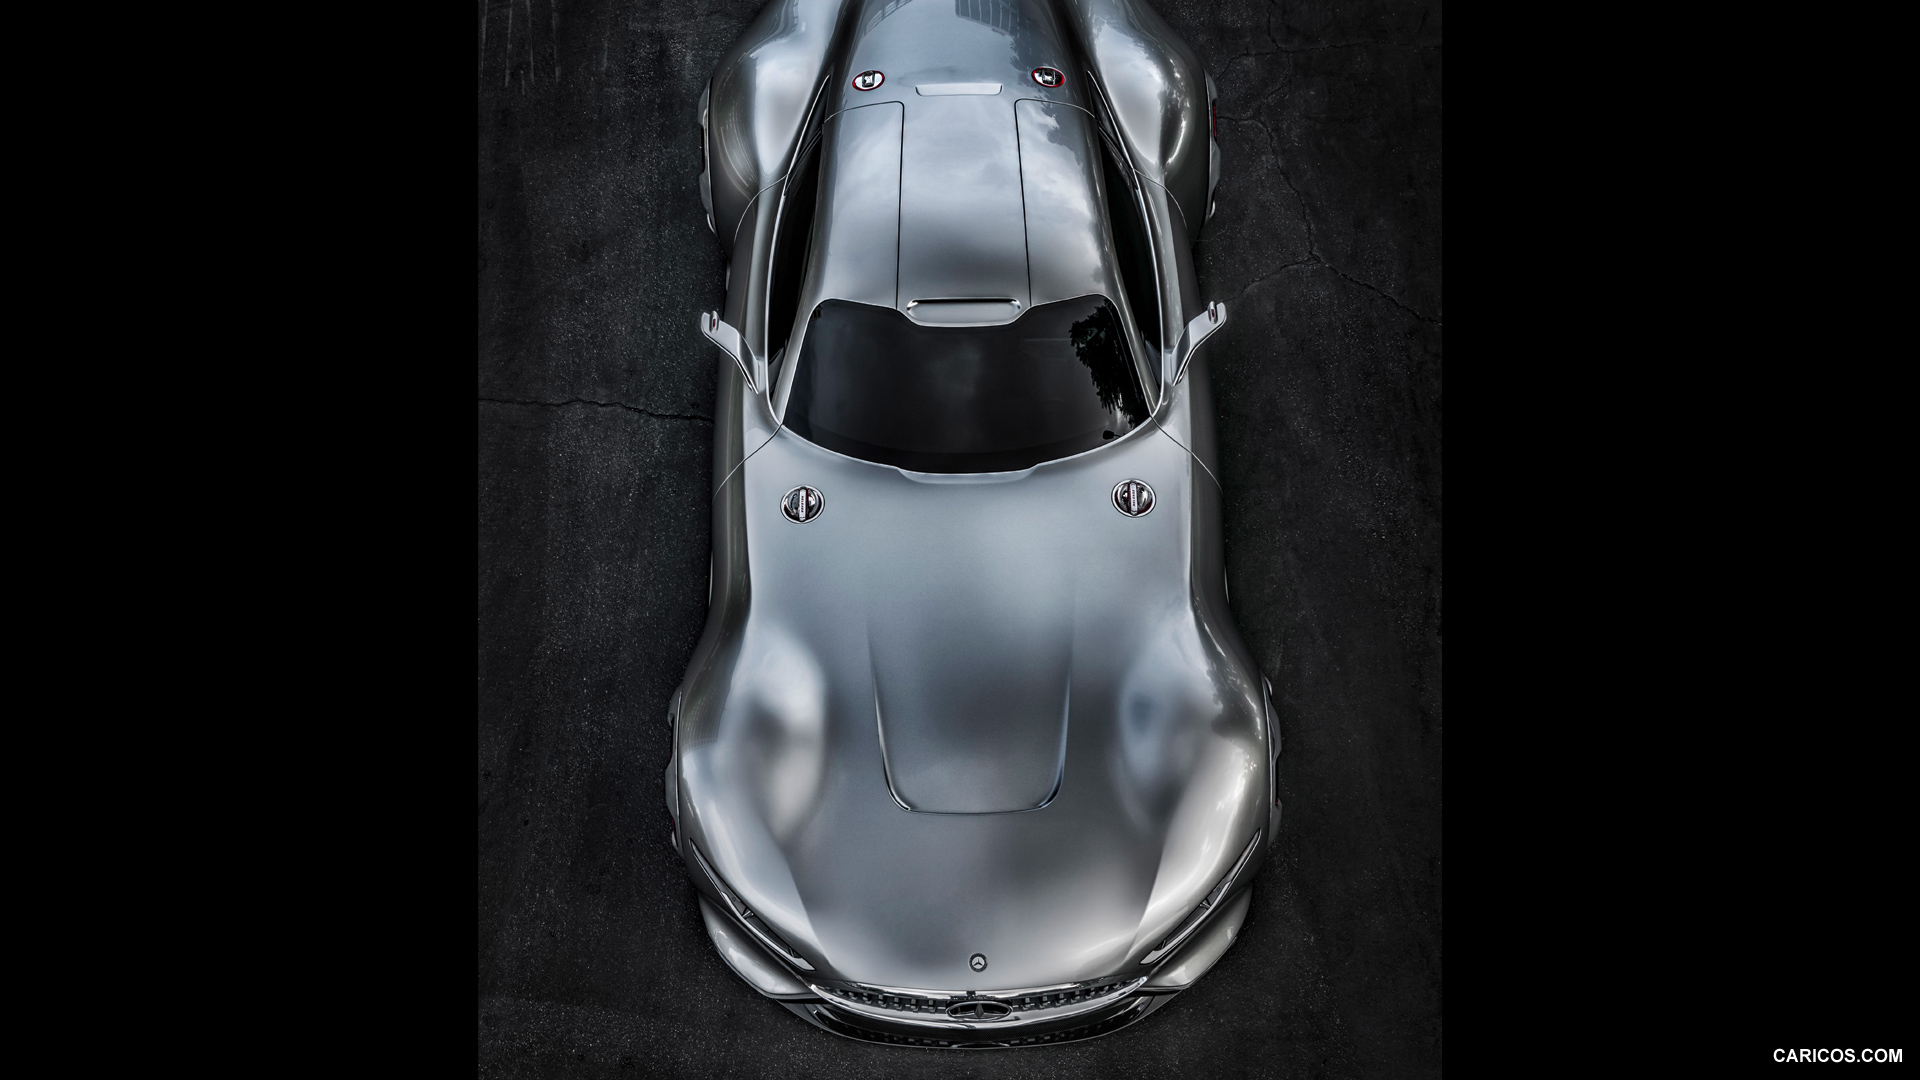 Mercedes-Benz AMG Vision Gran Turismo Concept (2013)  - Top, #16 of 25